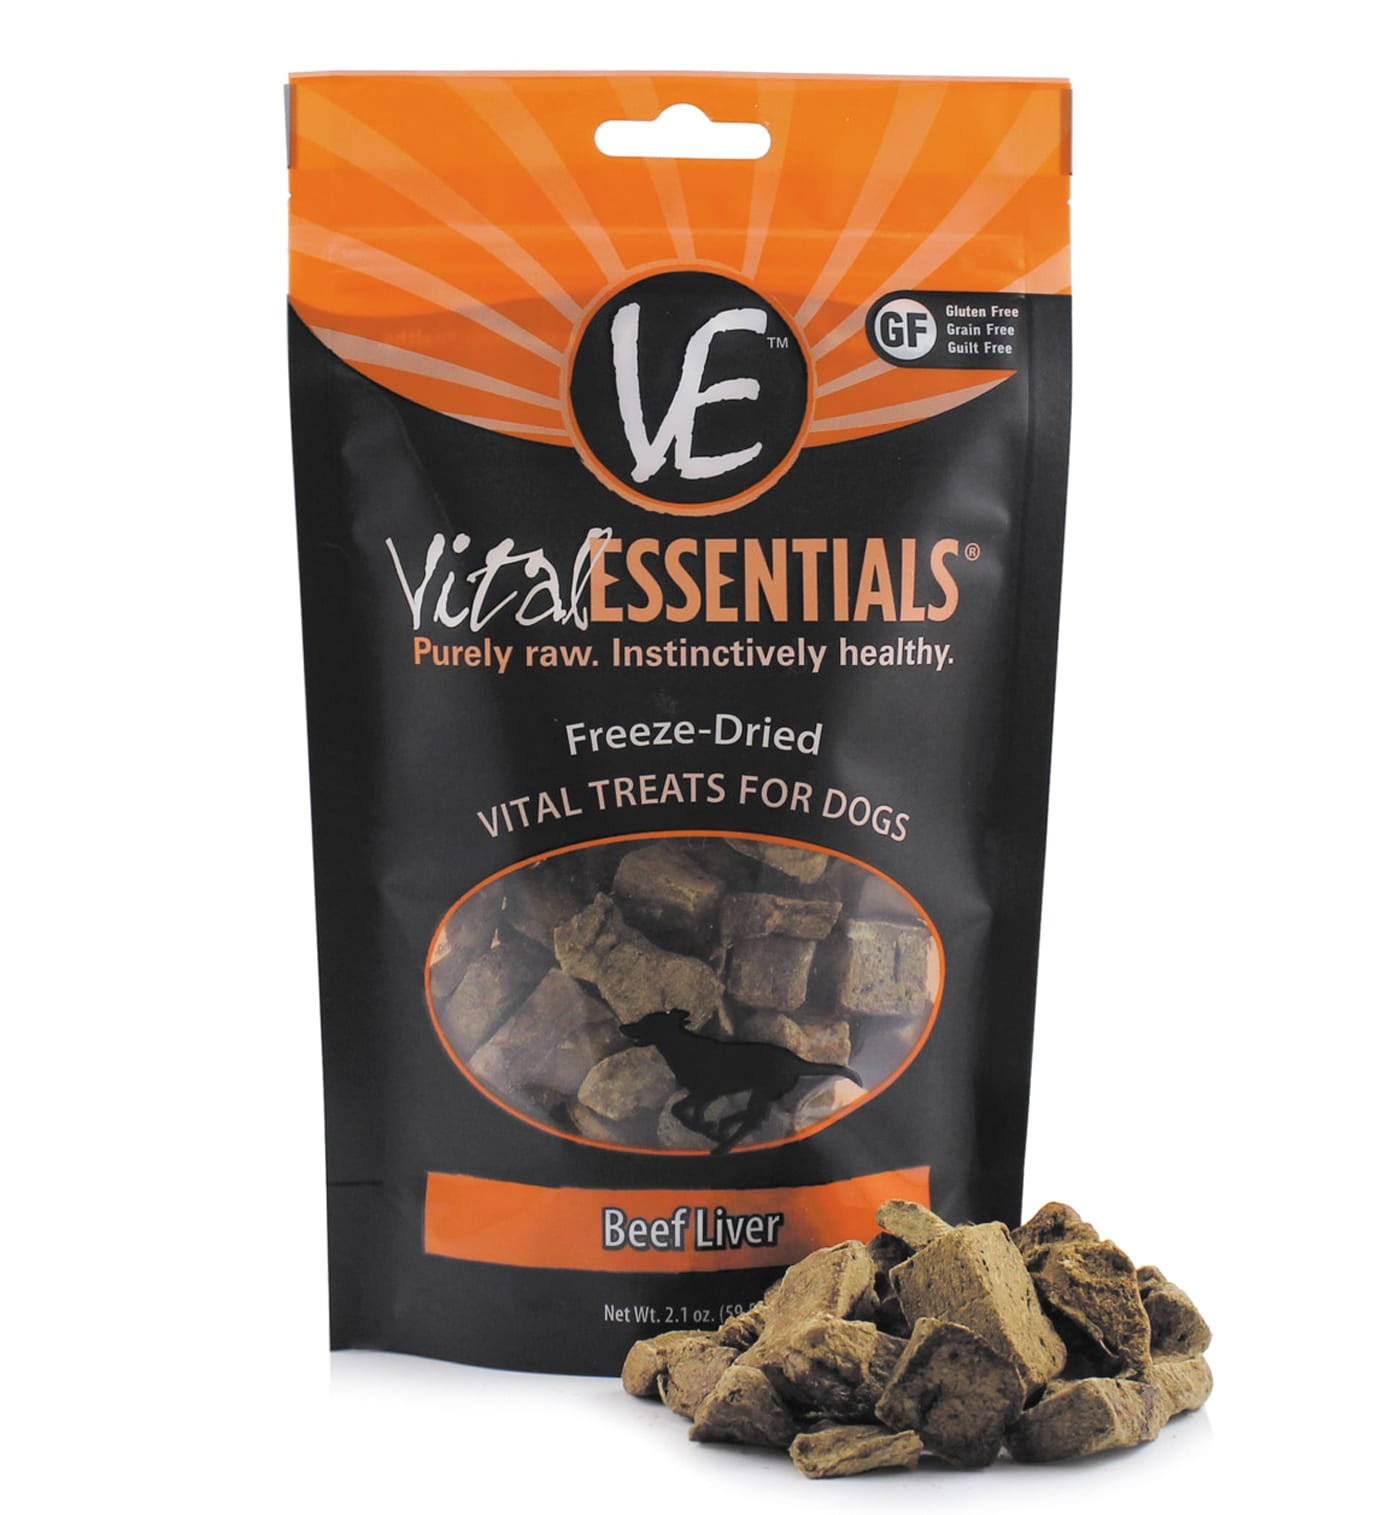 Vital Essentials Beef Liver Freeze-Dried Dog Treats, 2.1 oz